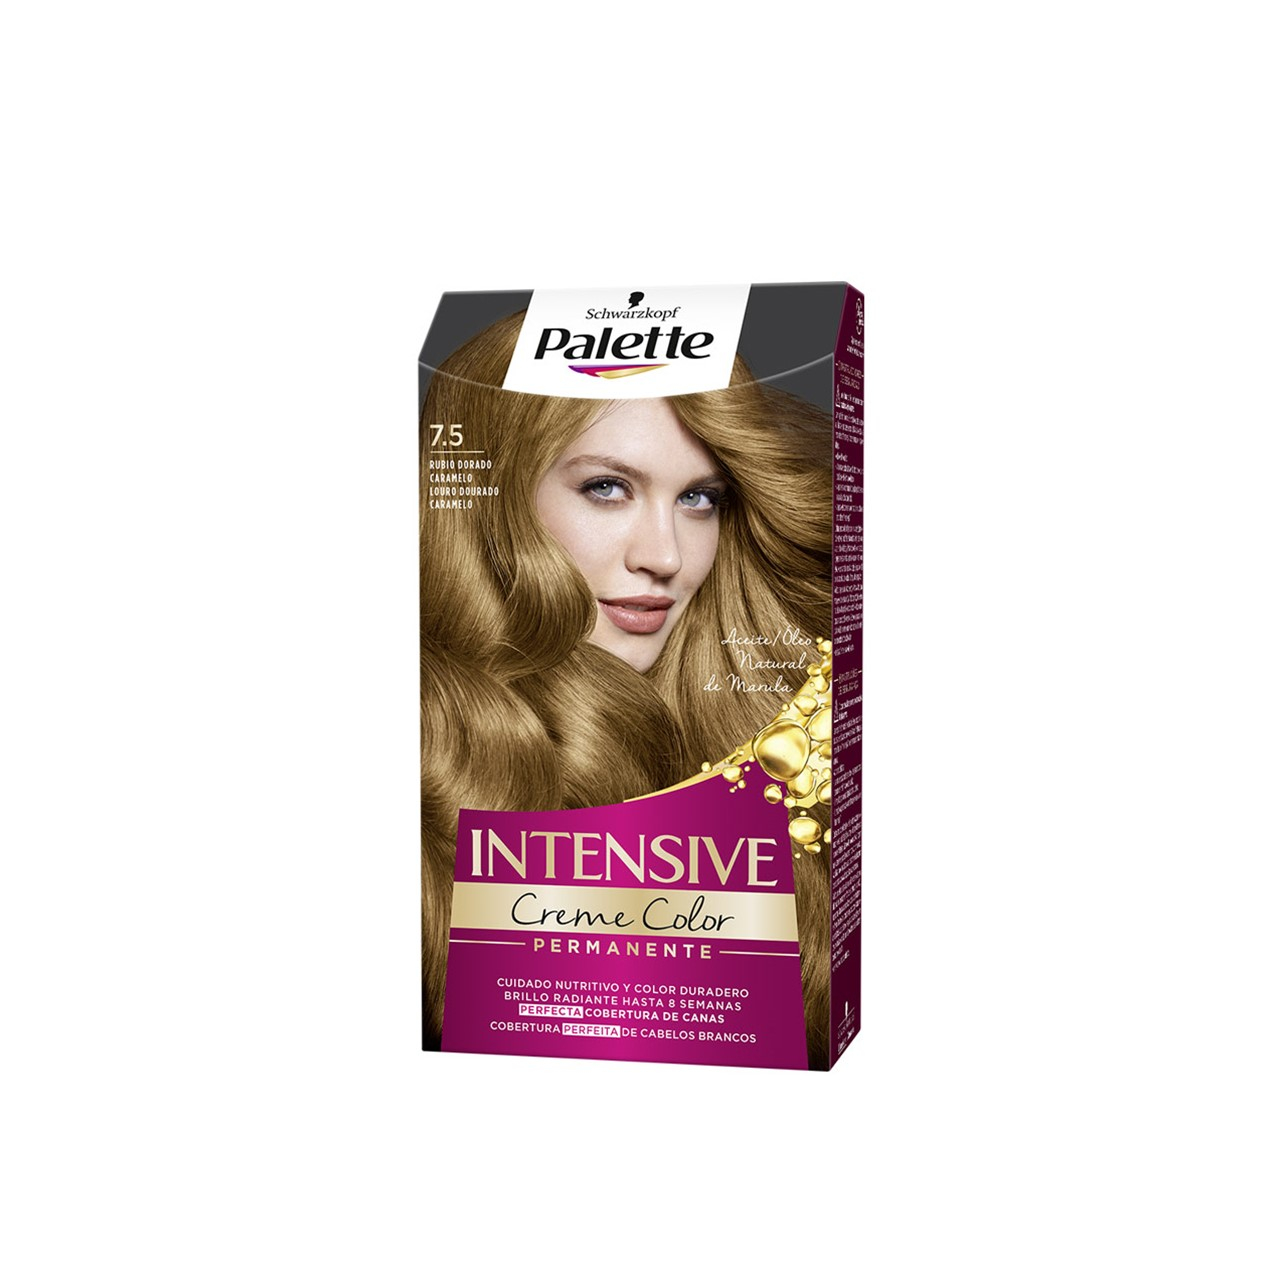 Schwarzkopf Palette Intensive Creme Color Permanent Hair Dye 7.5 Caramel Golden Blonde